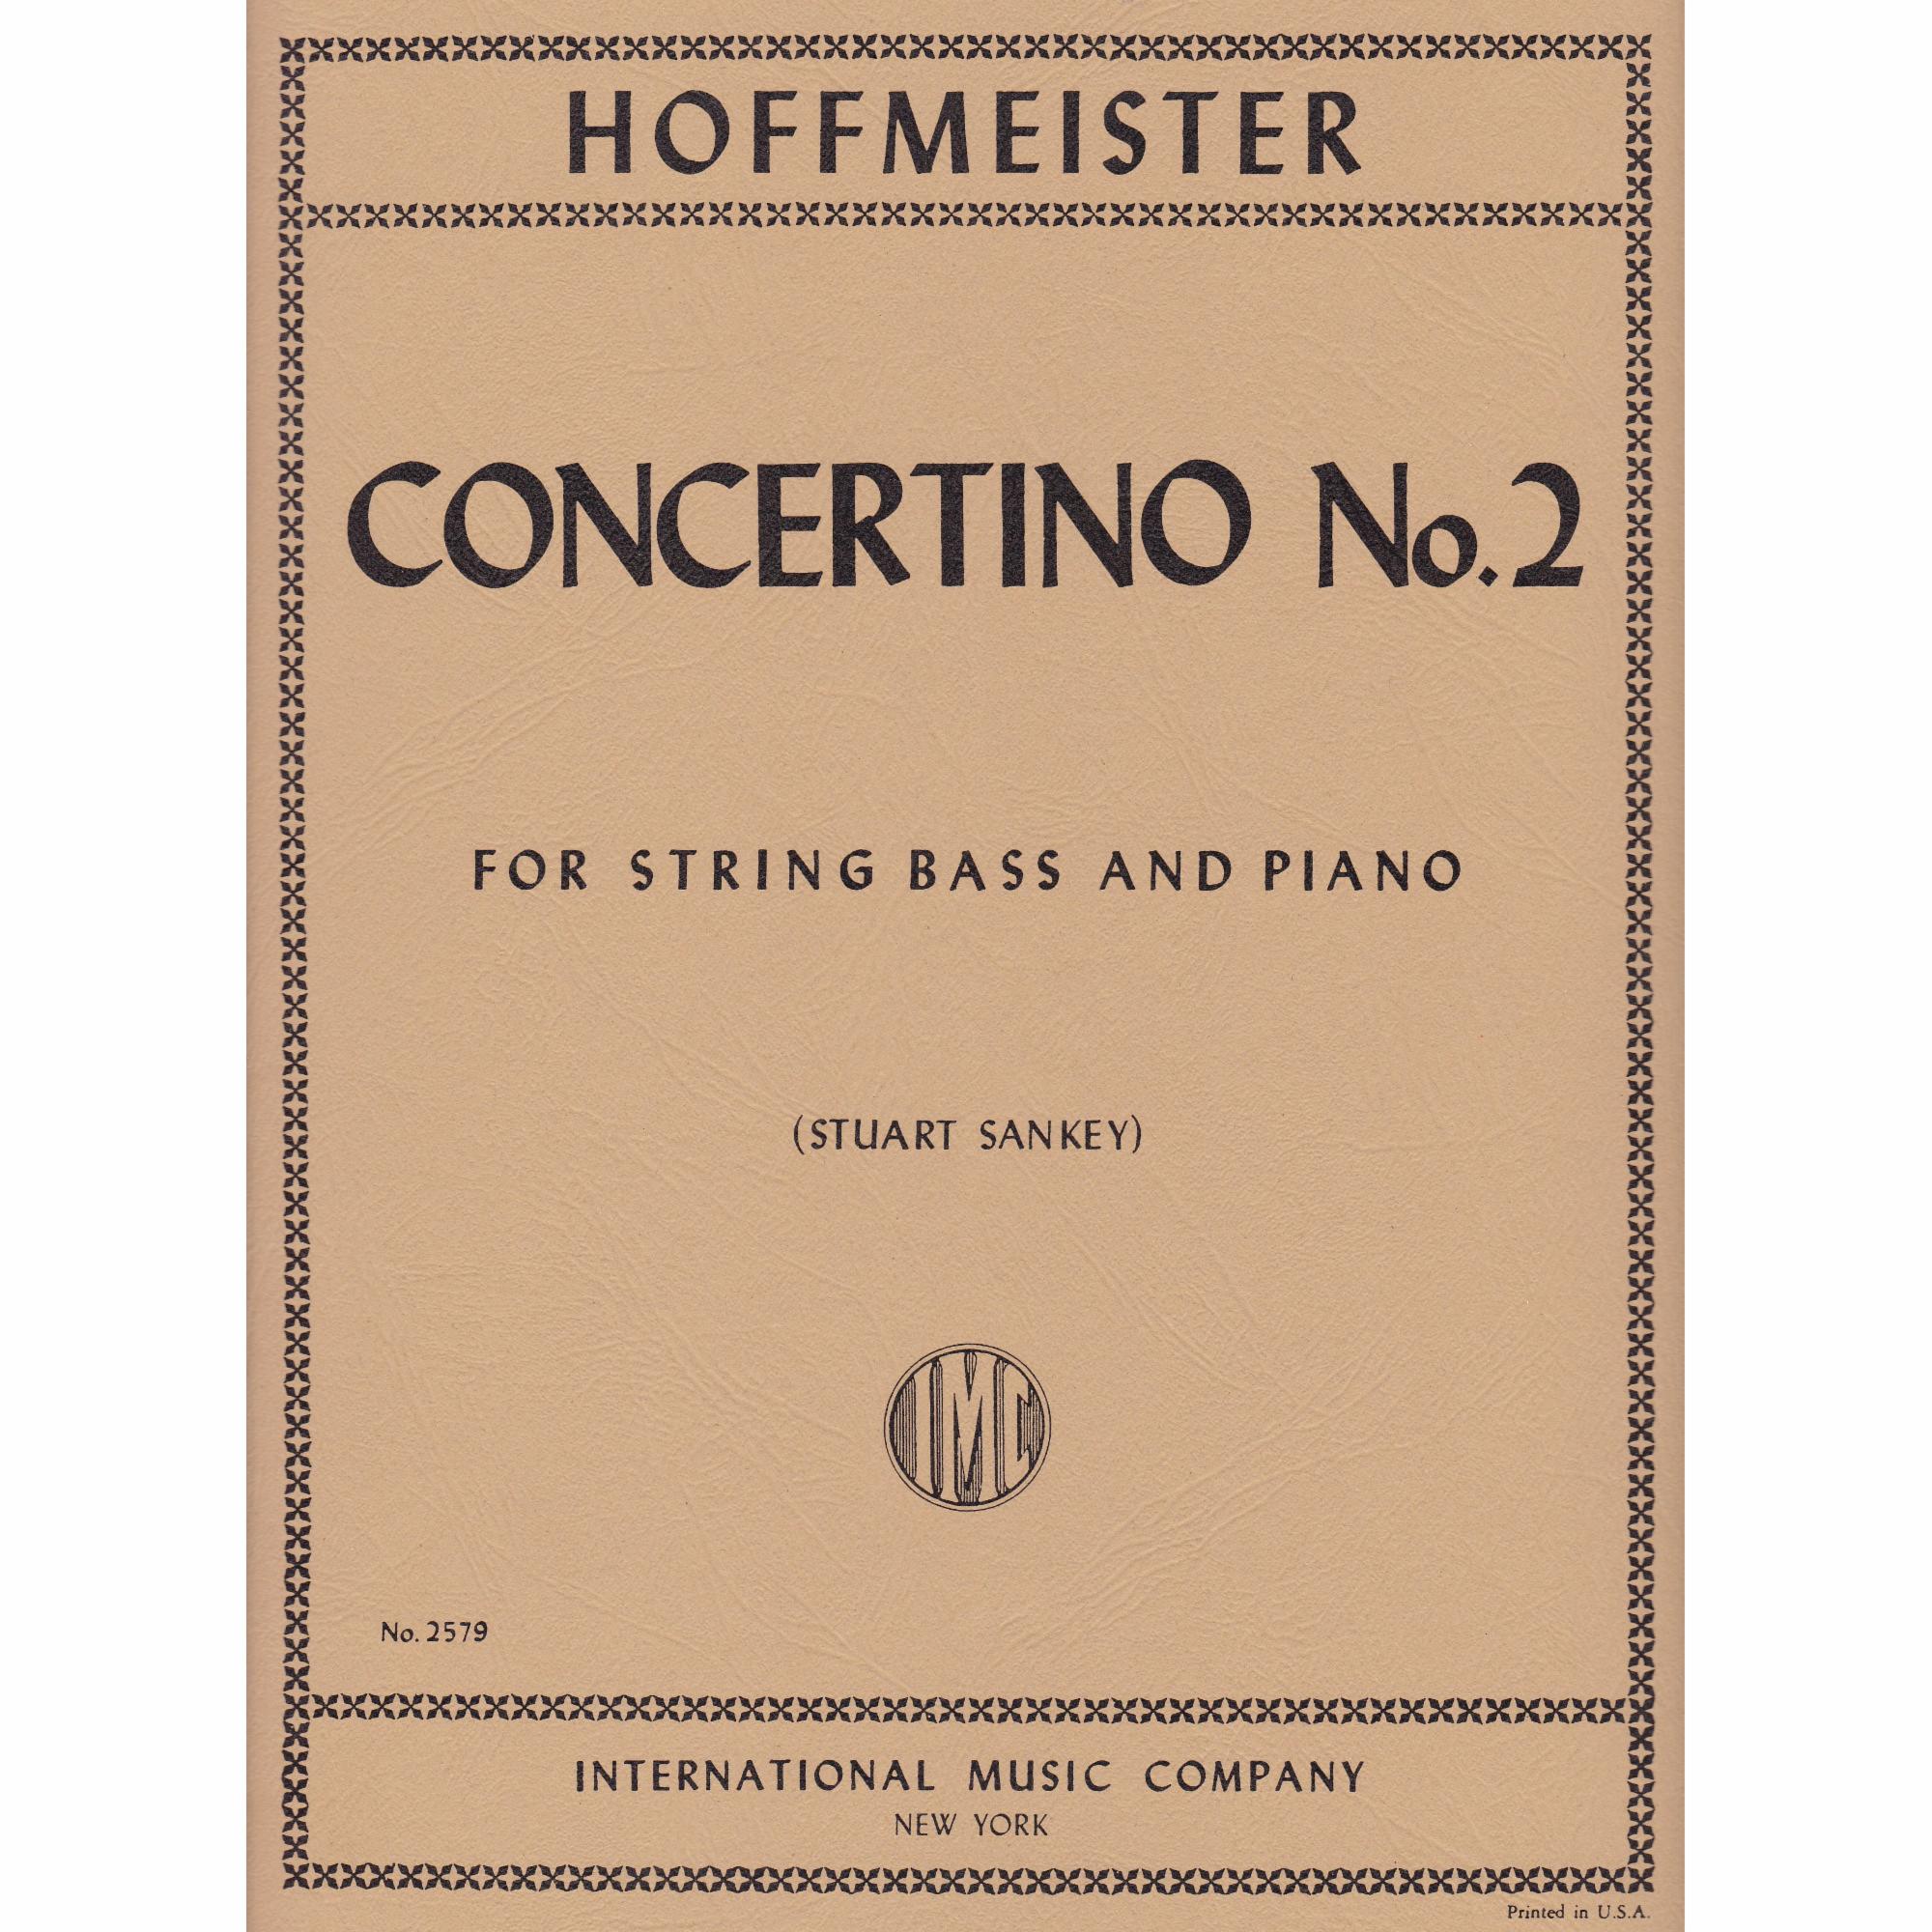 Bass Concertino No. 2 in D Major